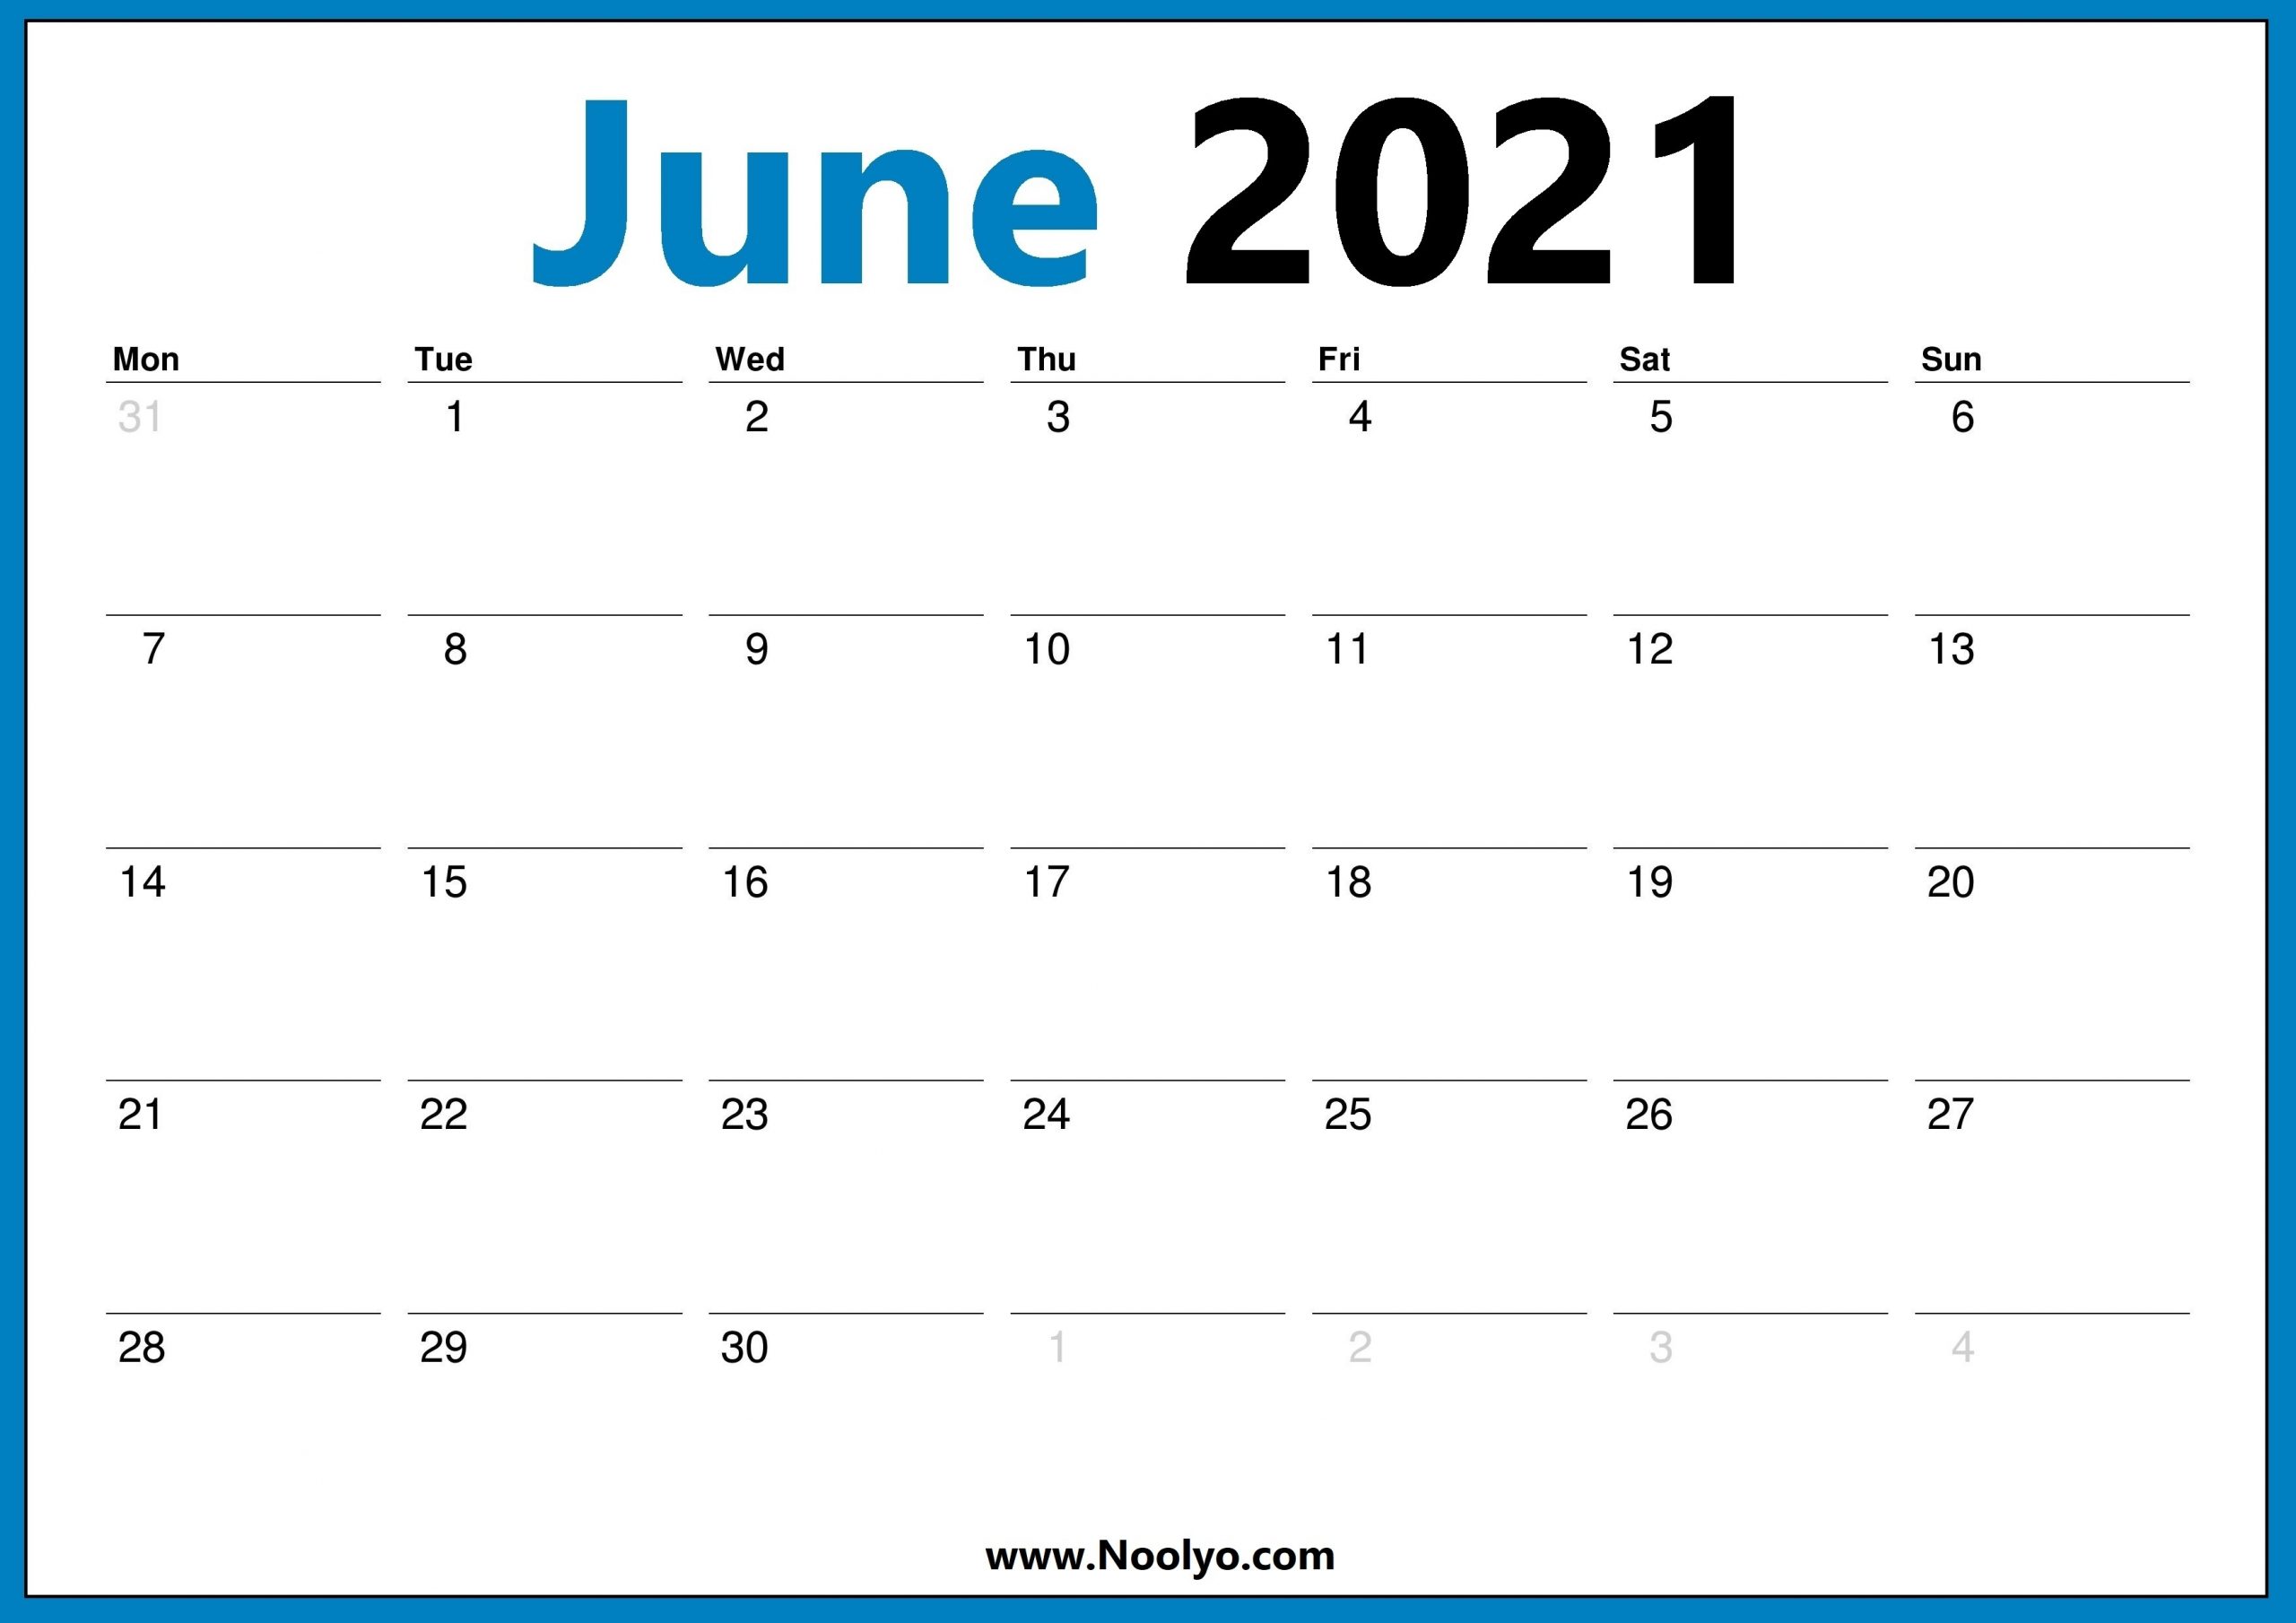 2021 June Calendar Monday Start Calendar Free Downloads - Noolyo June 2020 To June 2021 Calendar Printable